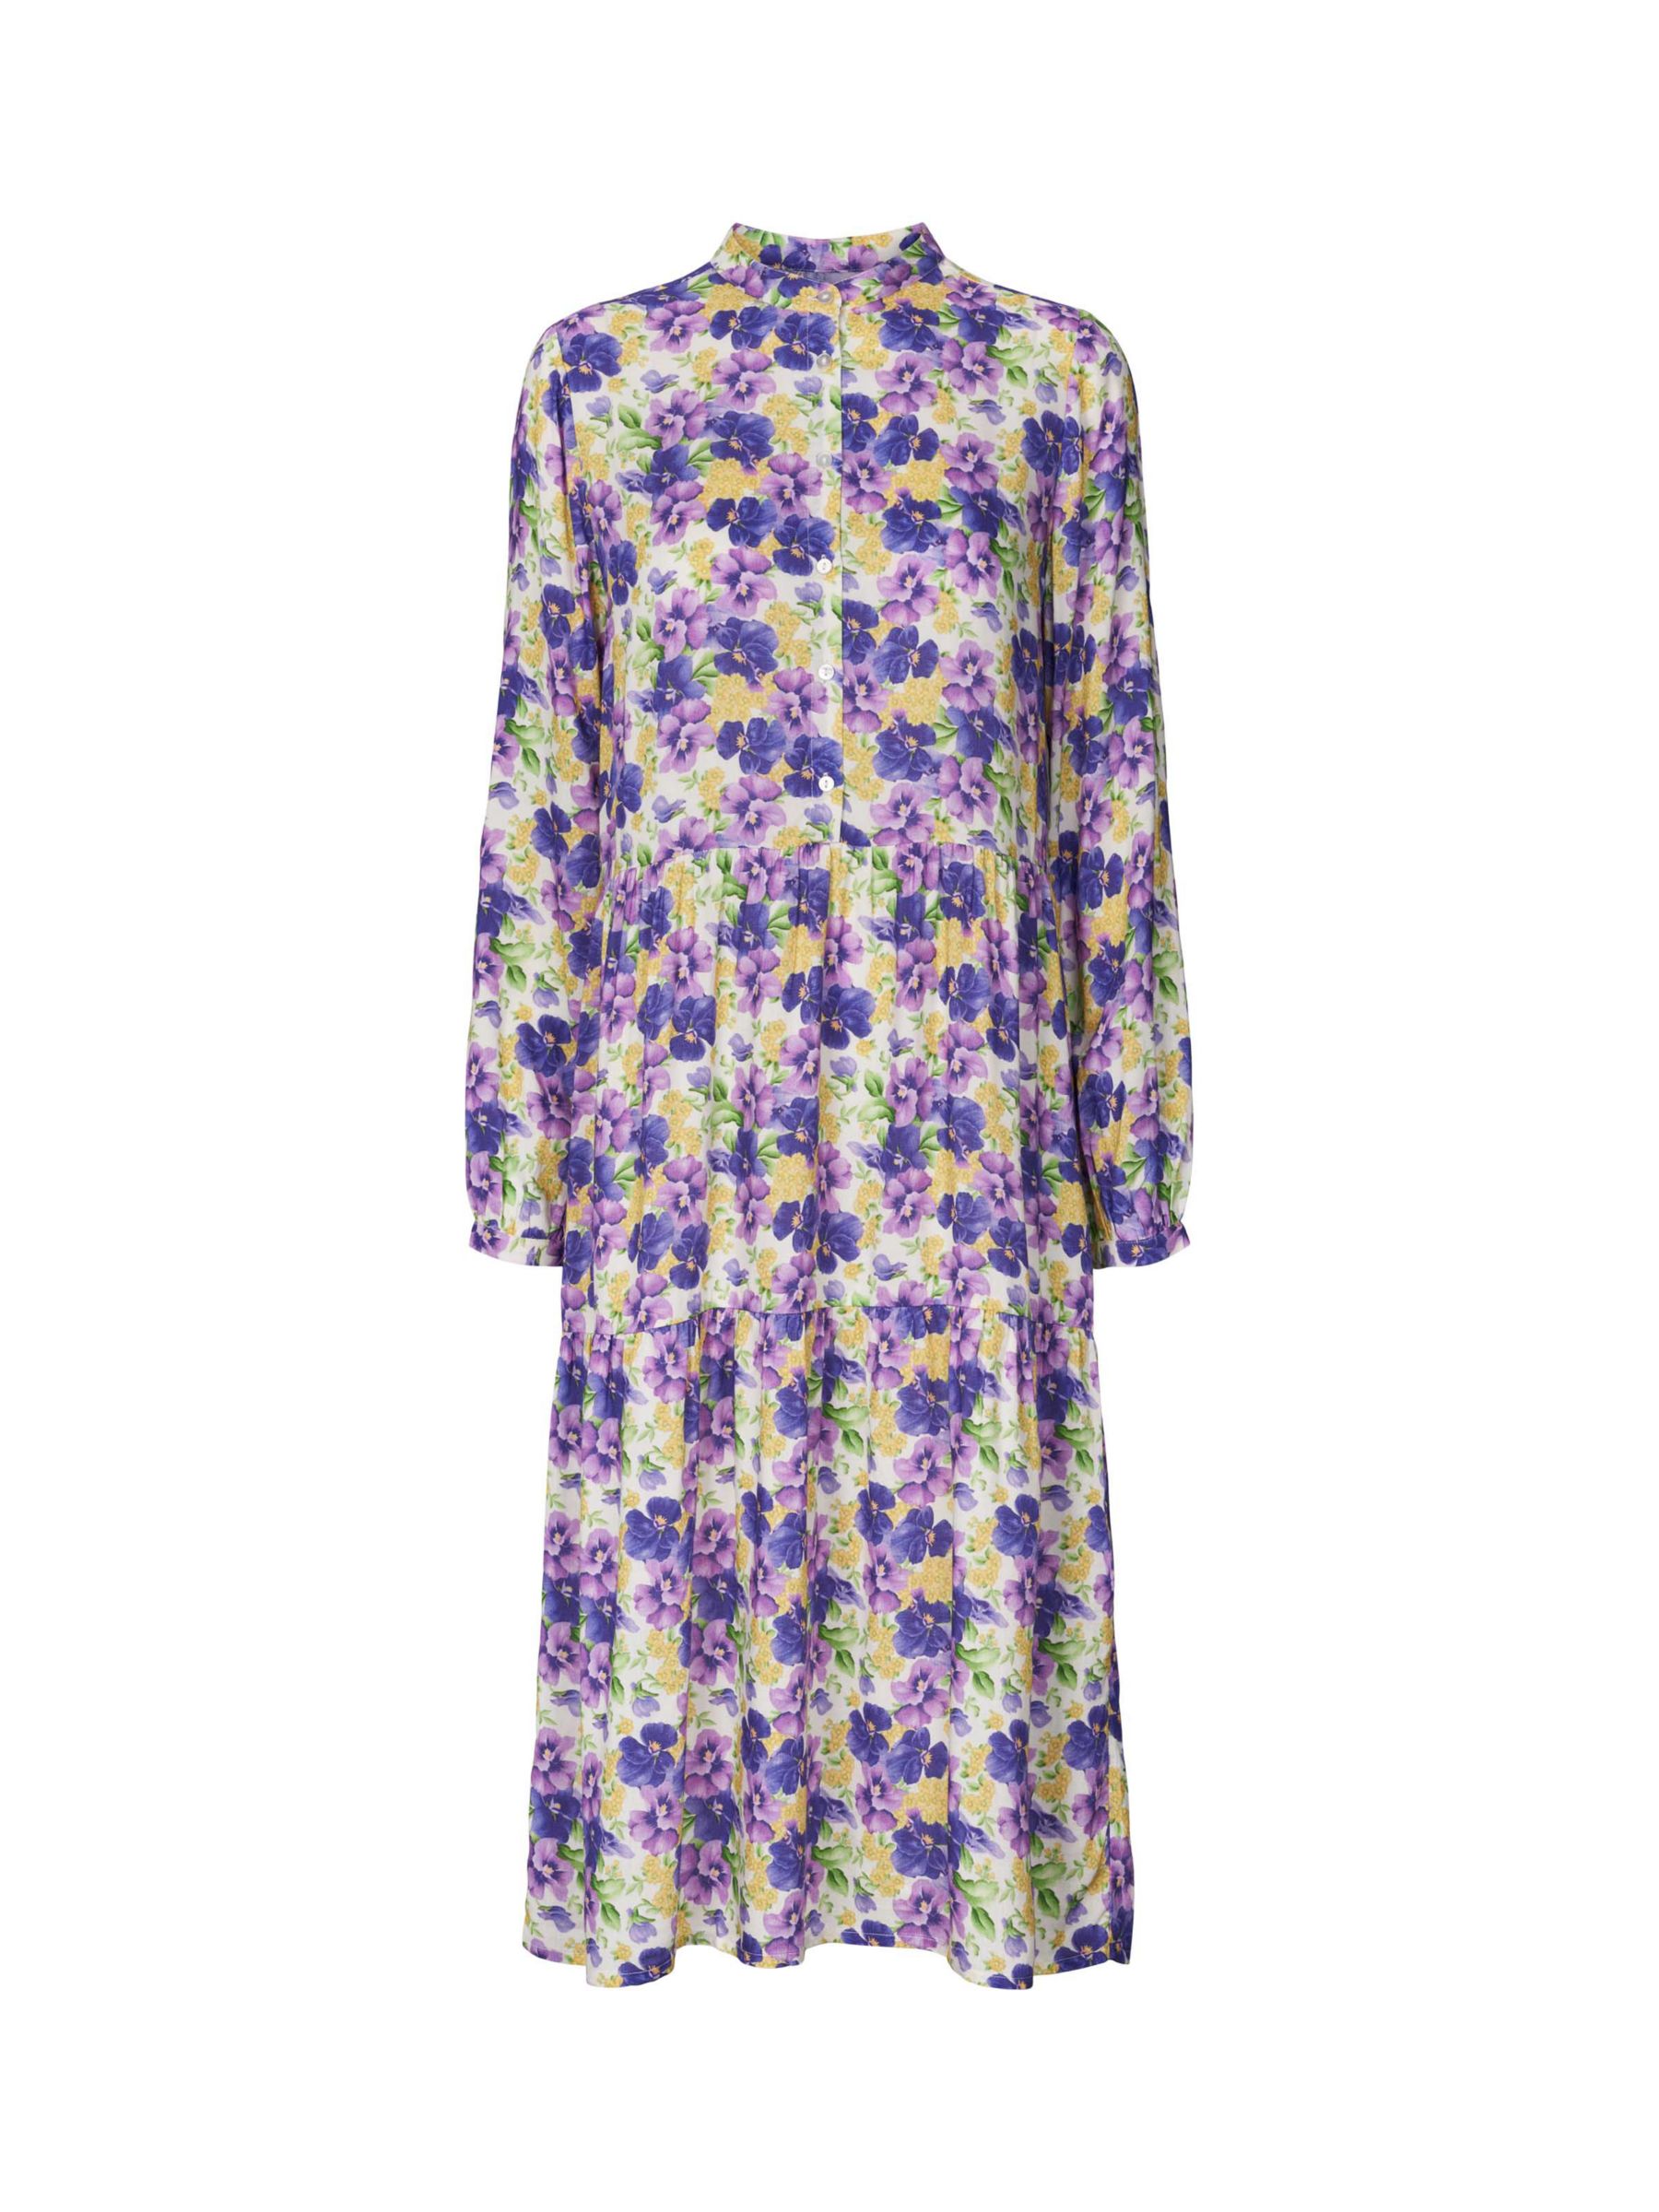 Lollys Laundry Anita Long Sleeved Floral Midi Dress, Multi, XS